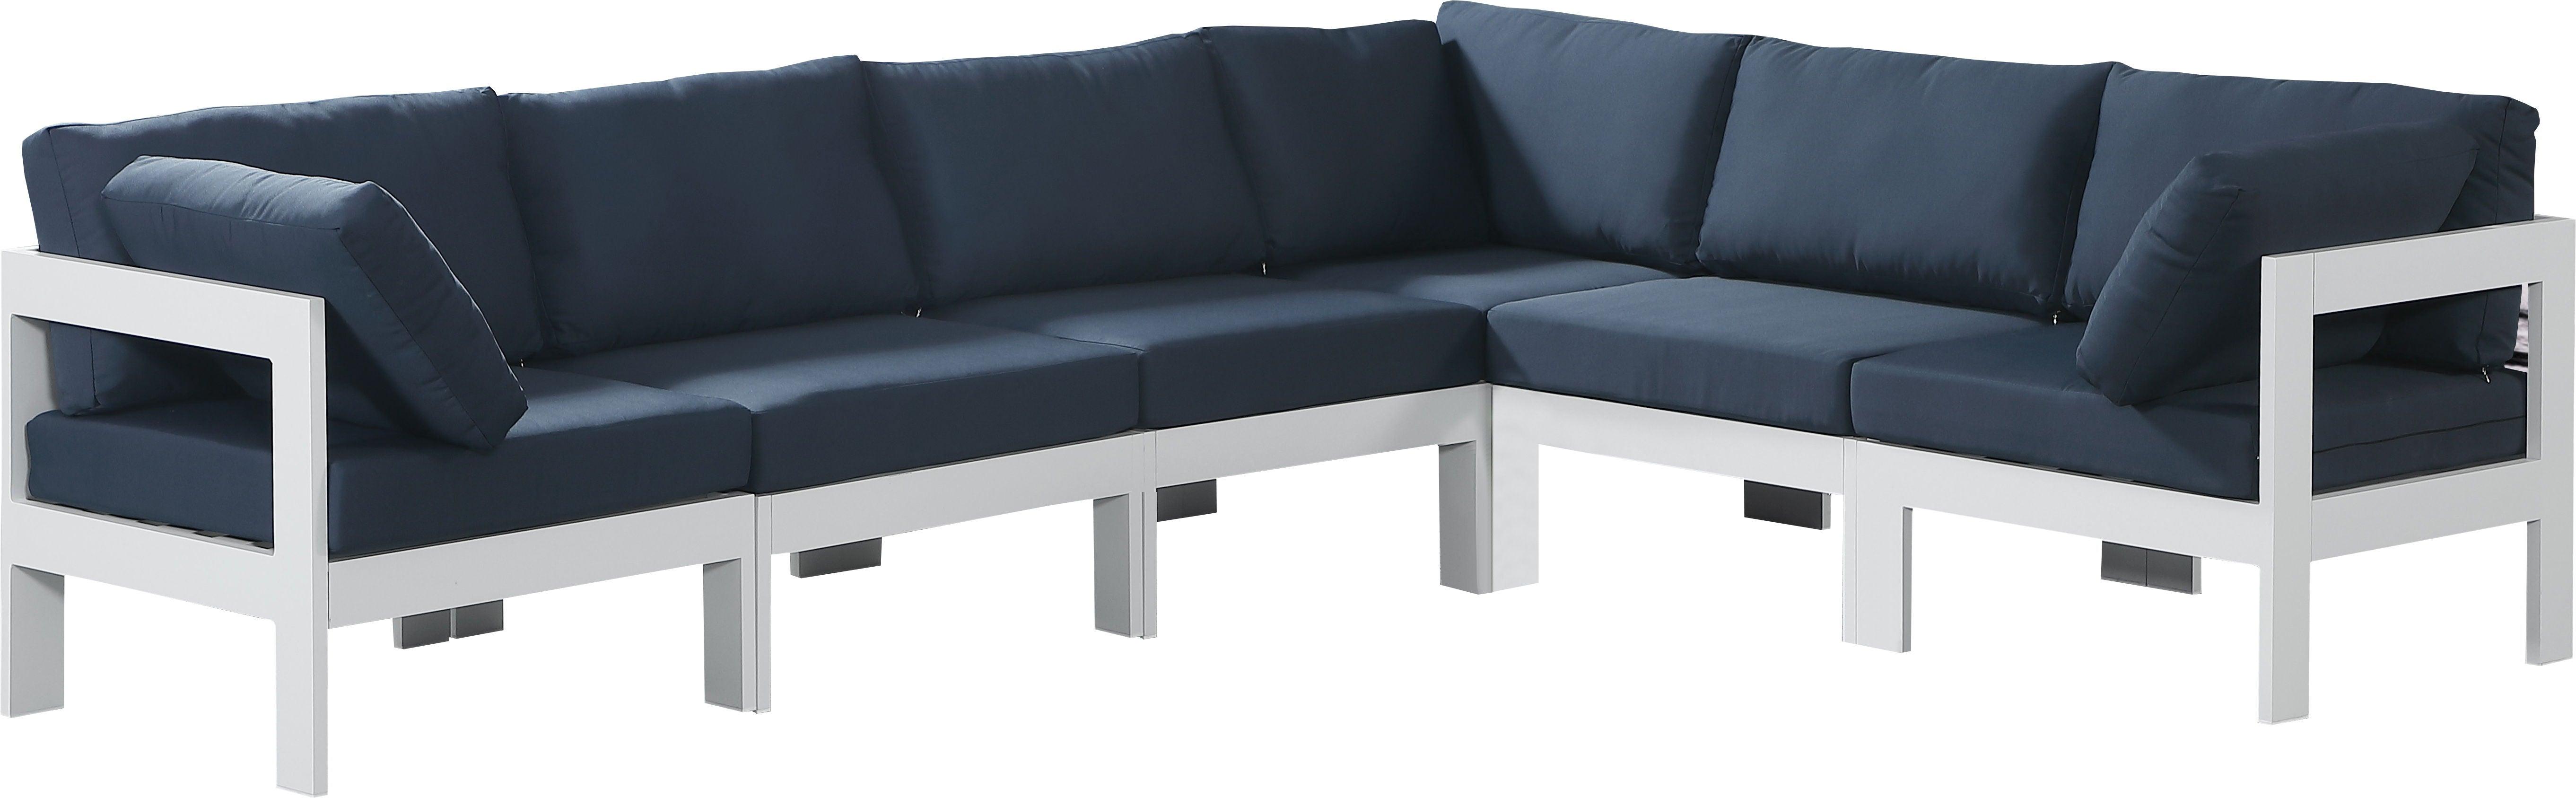 Meridian Furniture - Nizuc - Outdoor Patio Modular Sectional 6 Piece - Navy - 5th Avenue Furniture